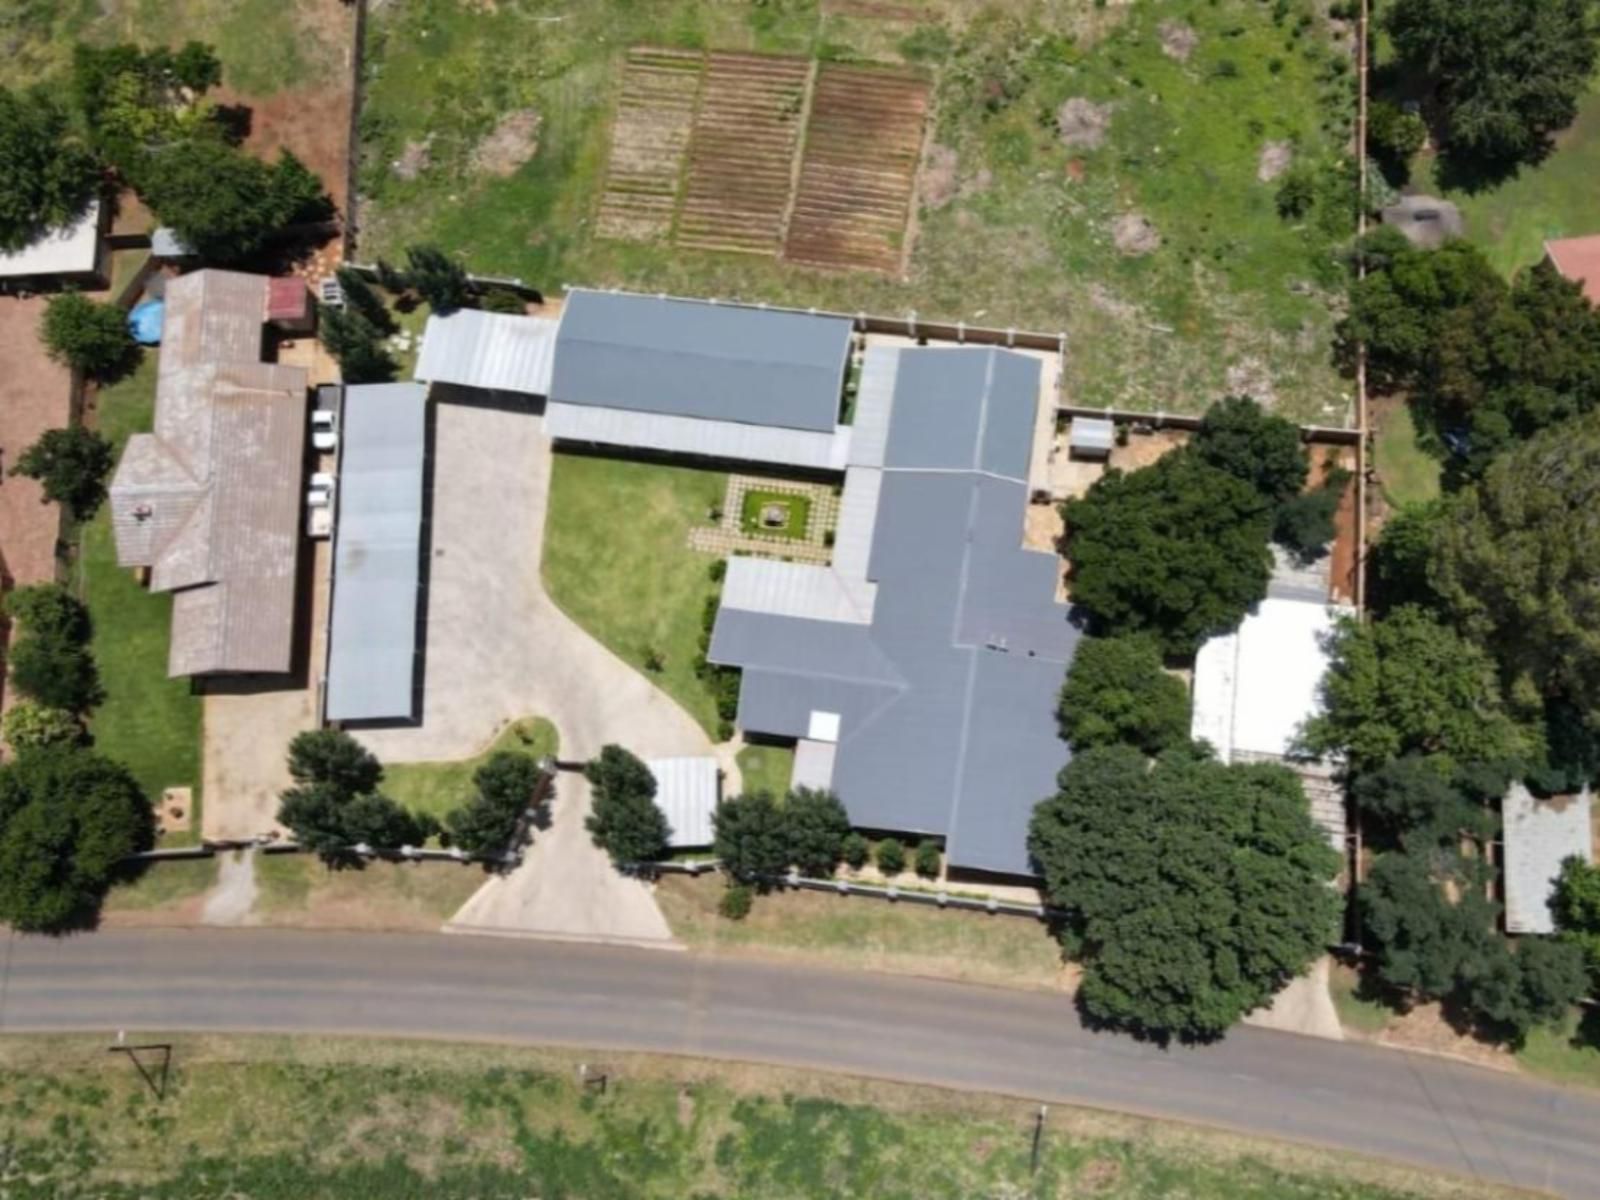 Graceland Guesthouse Van Der Hoff Park Potchefstroom North West Province South Africa House, Building, Architecture